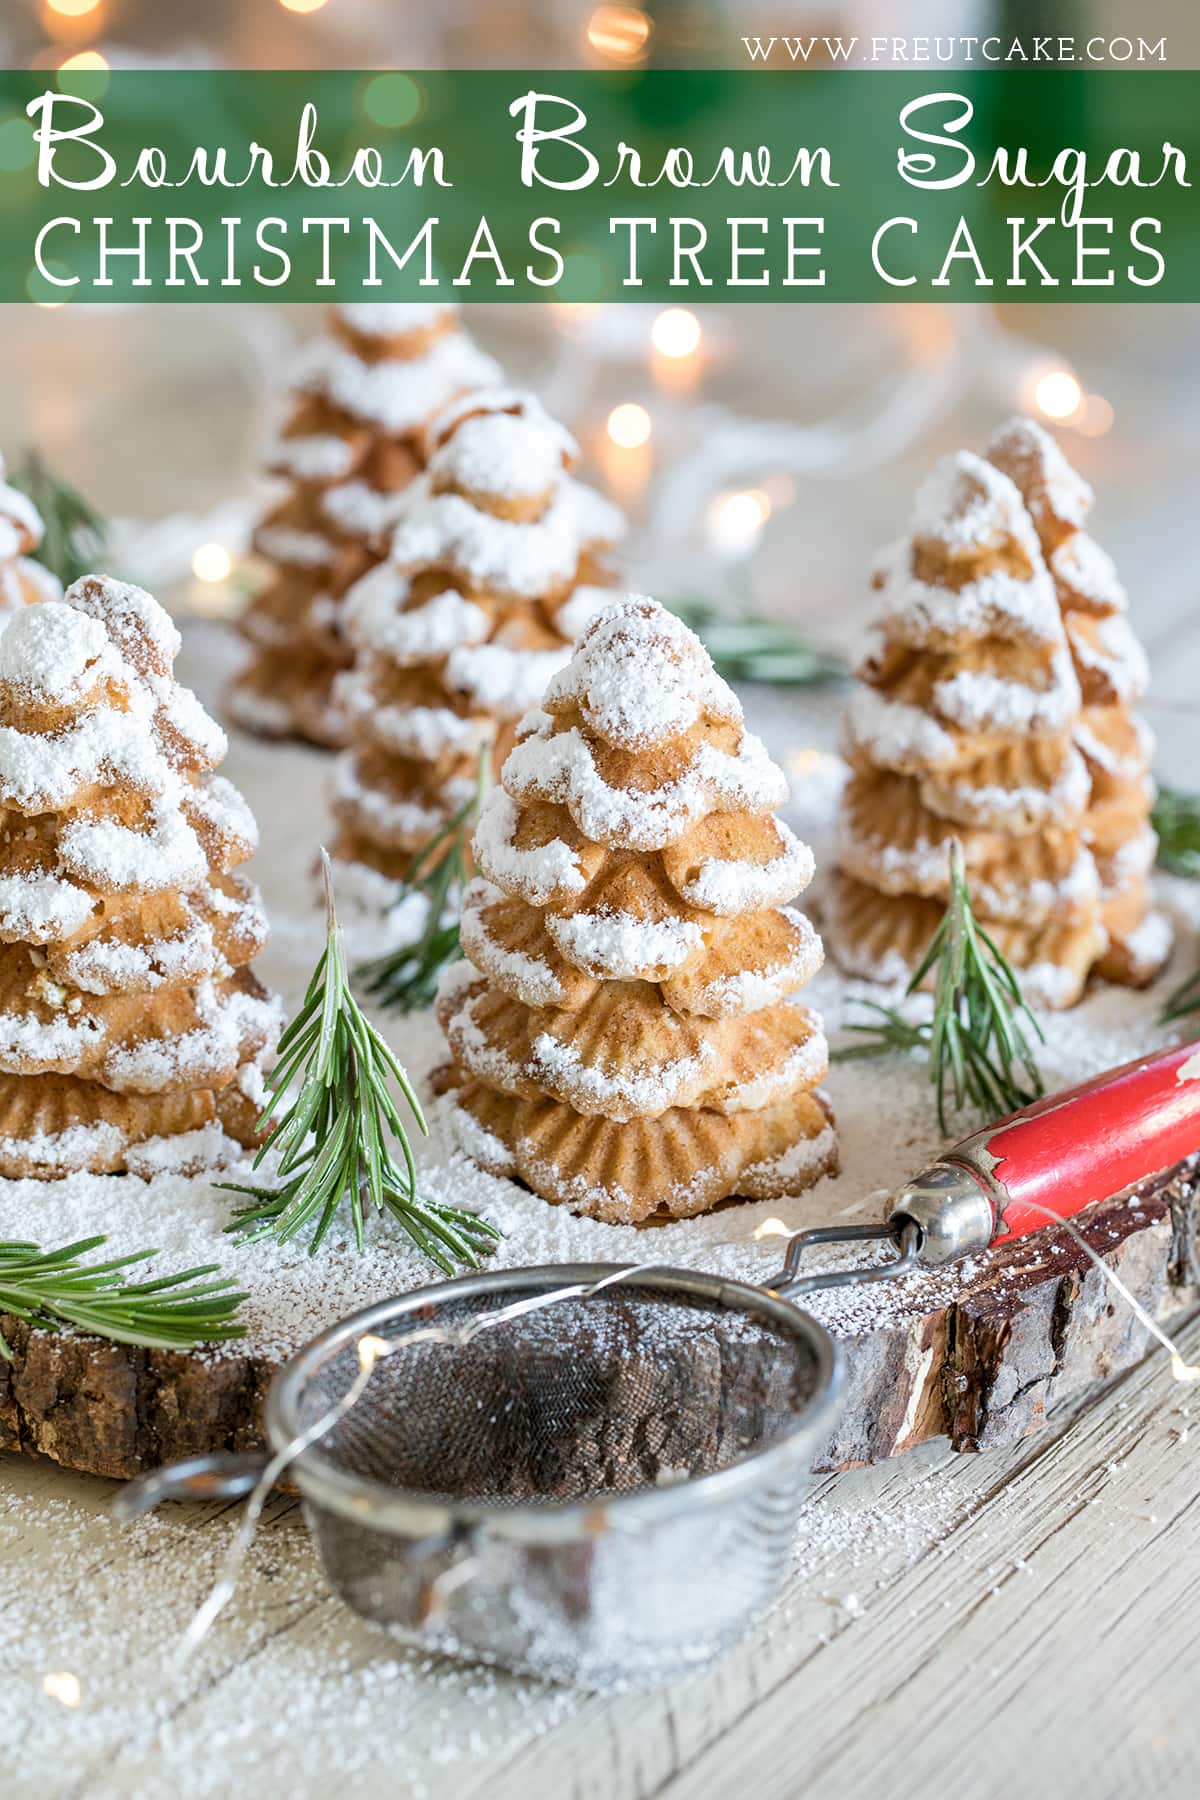 https://www.freutcake.com/wp-content/uploads/2019/11/Bourbon-Brown-Sugar-Christmas-Tree-Cakes.jpg